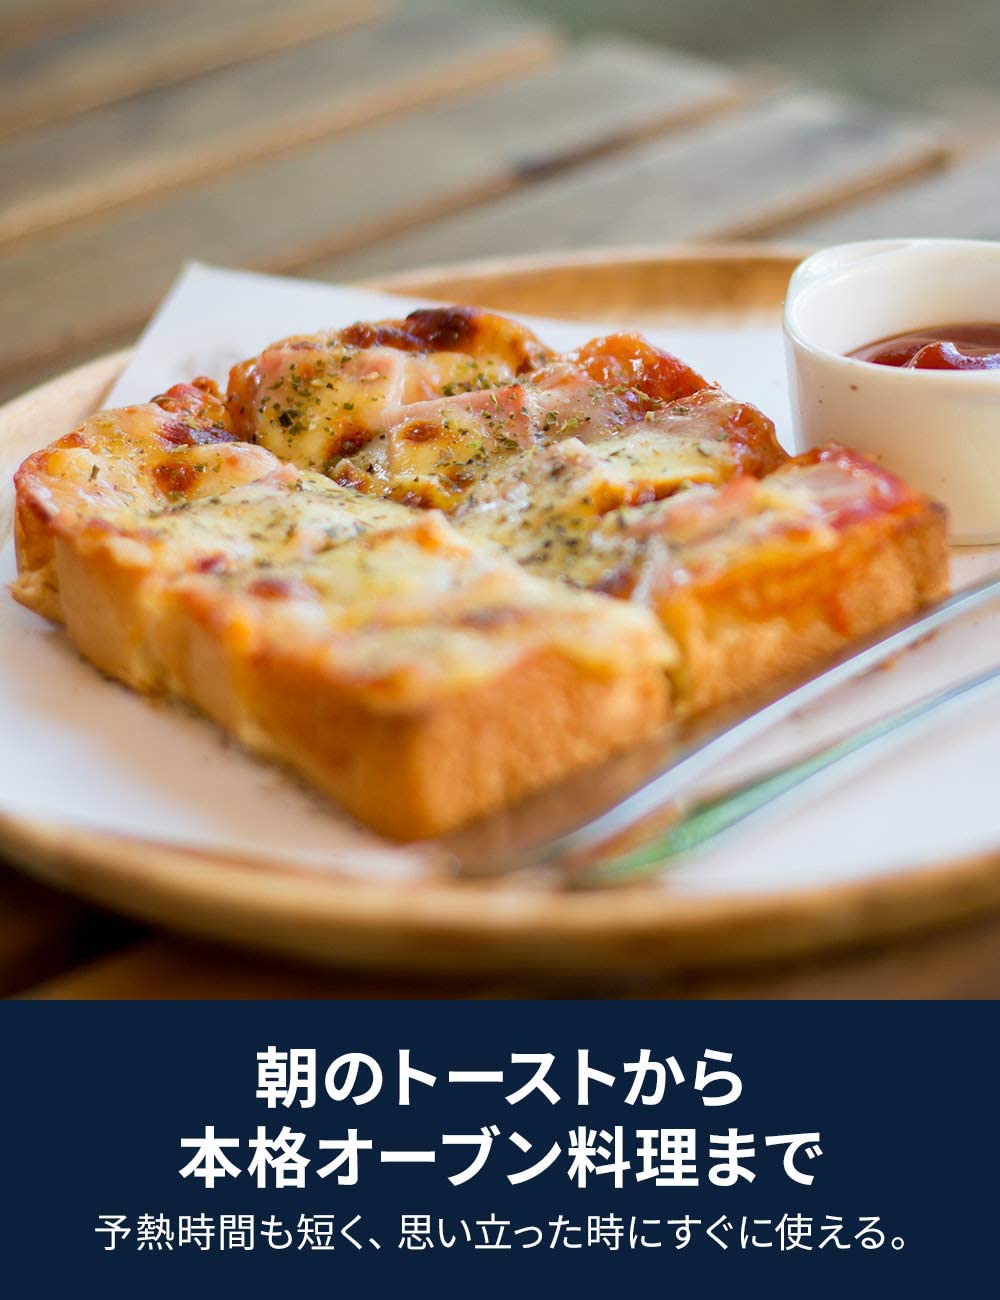 【DeLonghi】オーブン&トースター YL